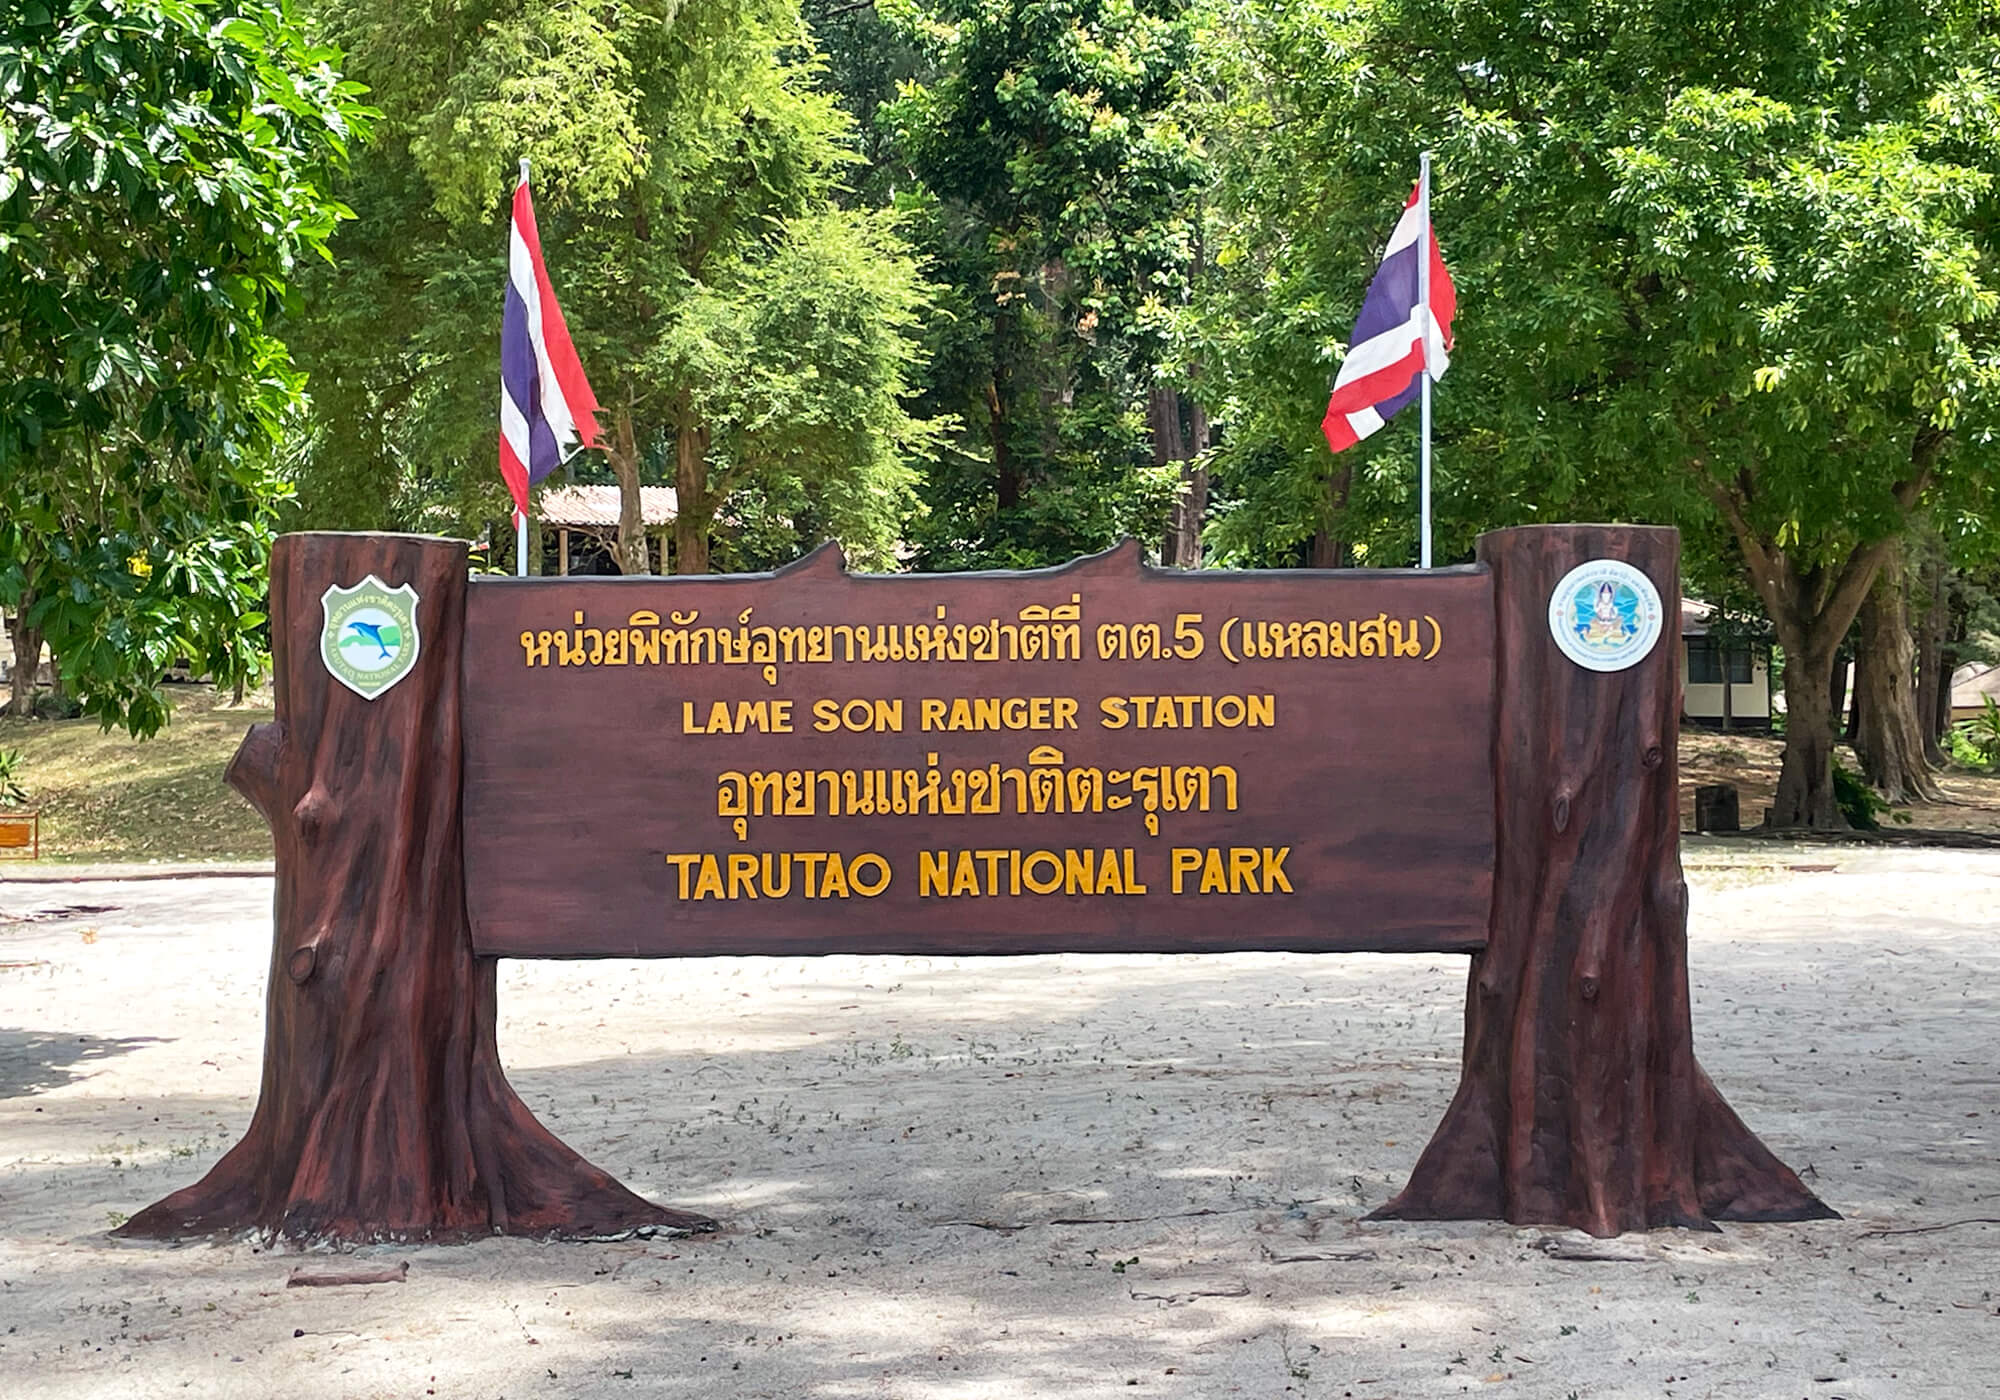 Entering Tarutao National Park, Koh Adang